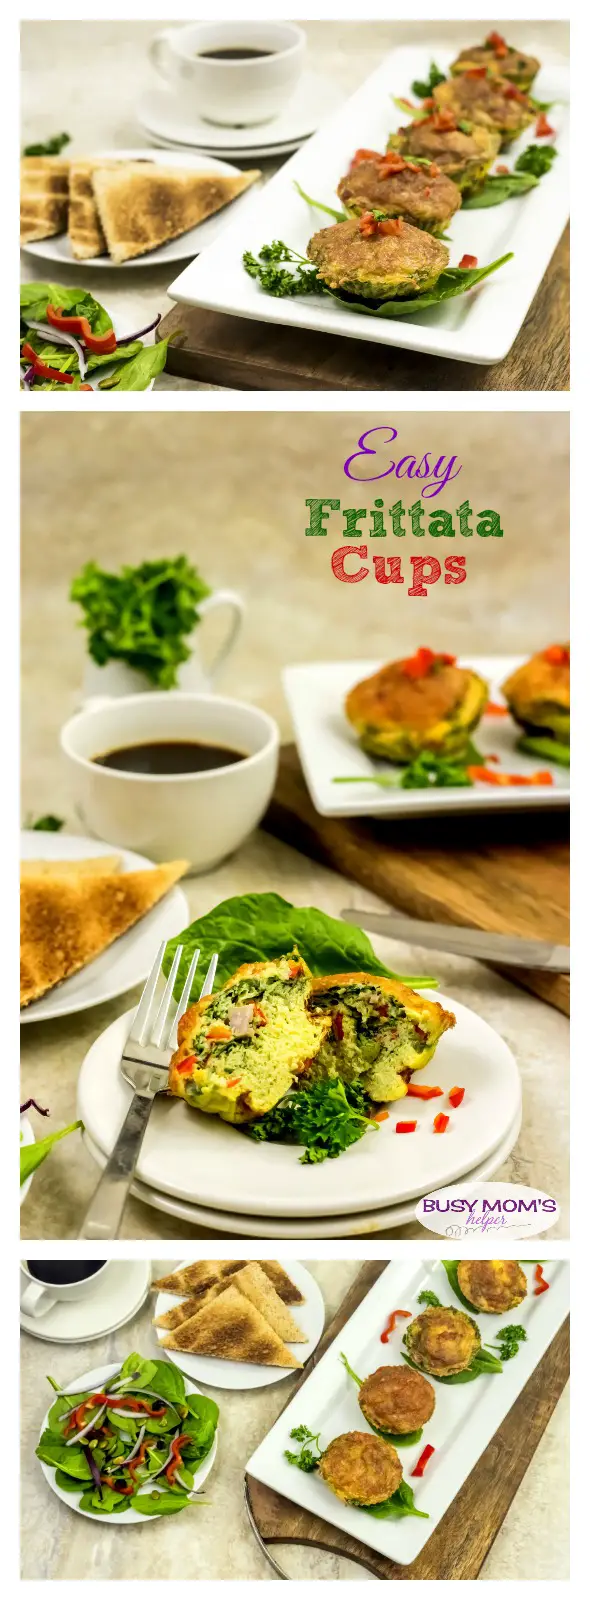 Easy Frittata Cups / a great easy breakfast recipe